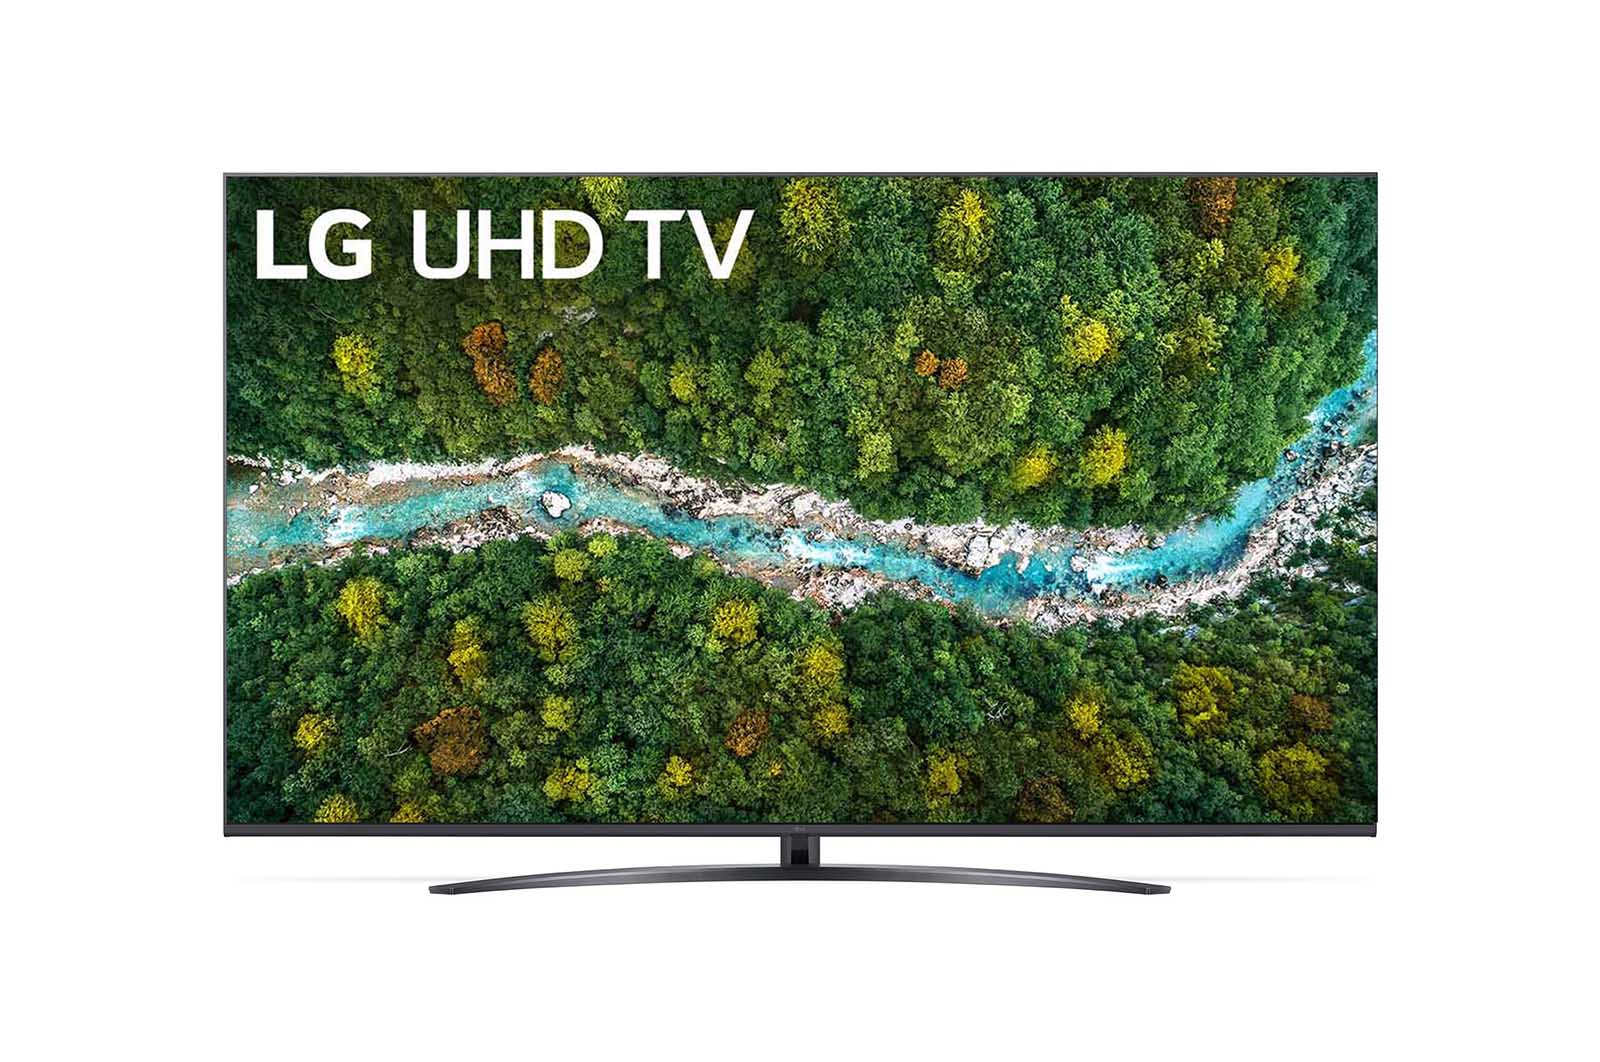 LG UHD TV 4K, série UP78, Processador Quad Core, webOS 6.0, 43UP78006LB